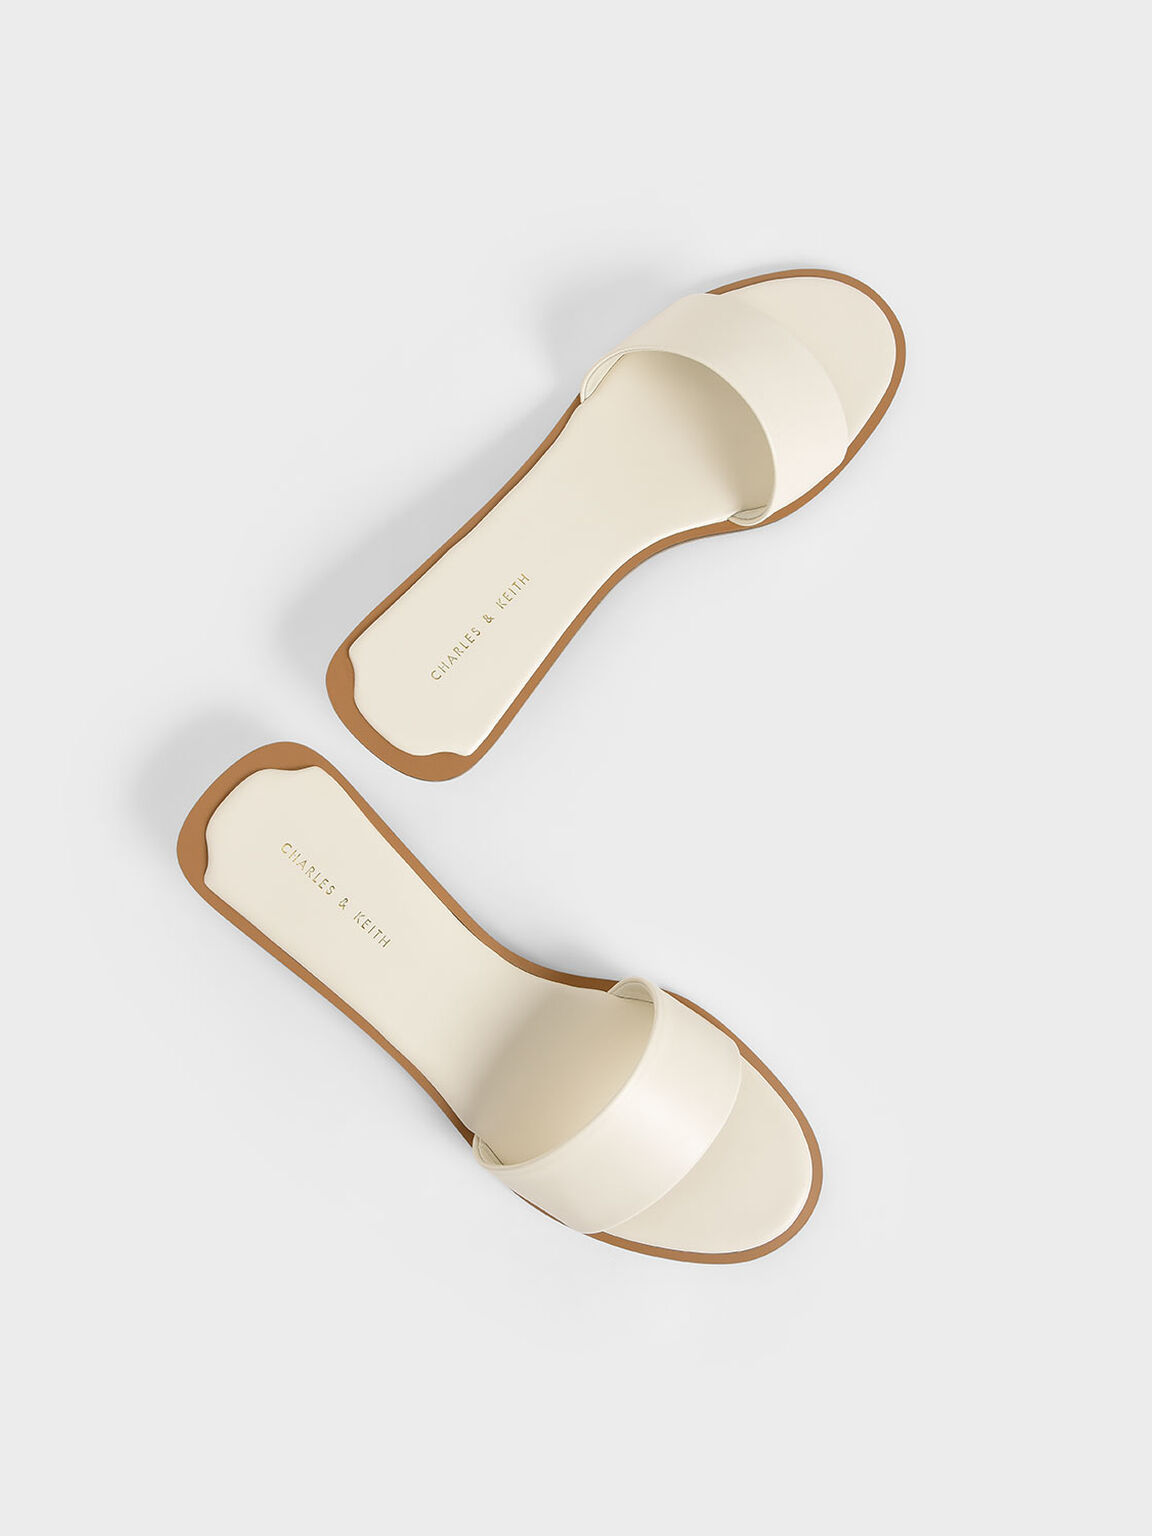 Two-Tone Slide Sandals, Cream, hi-res